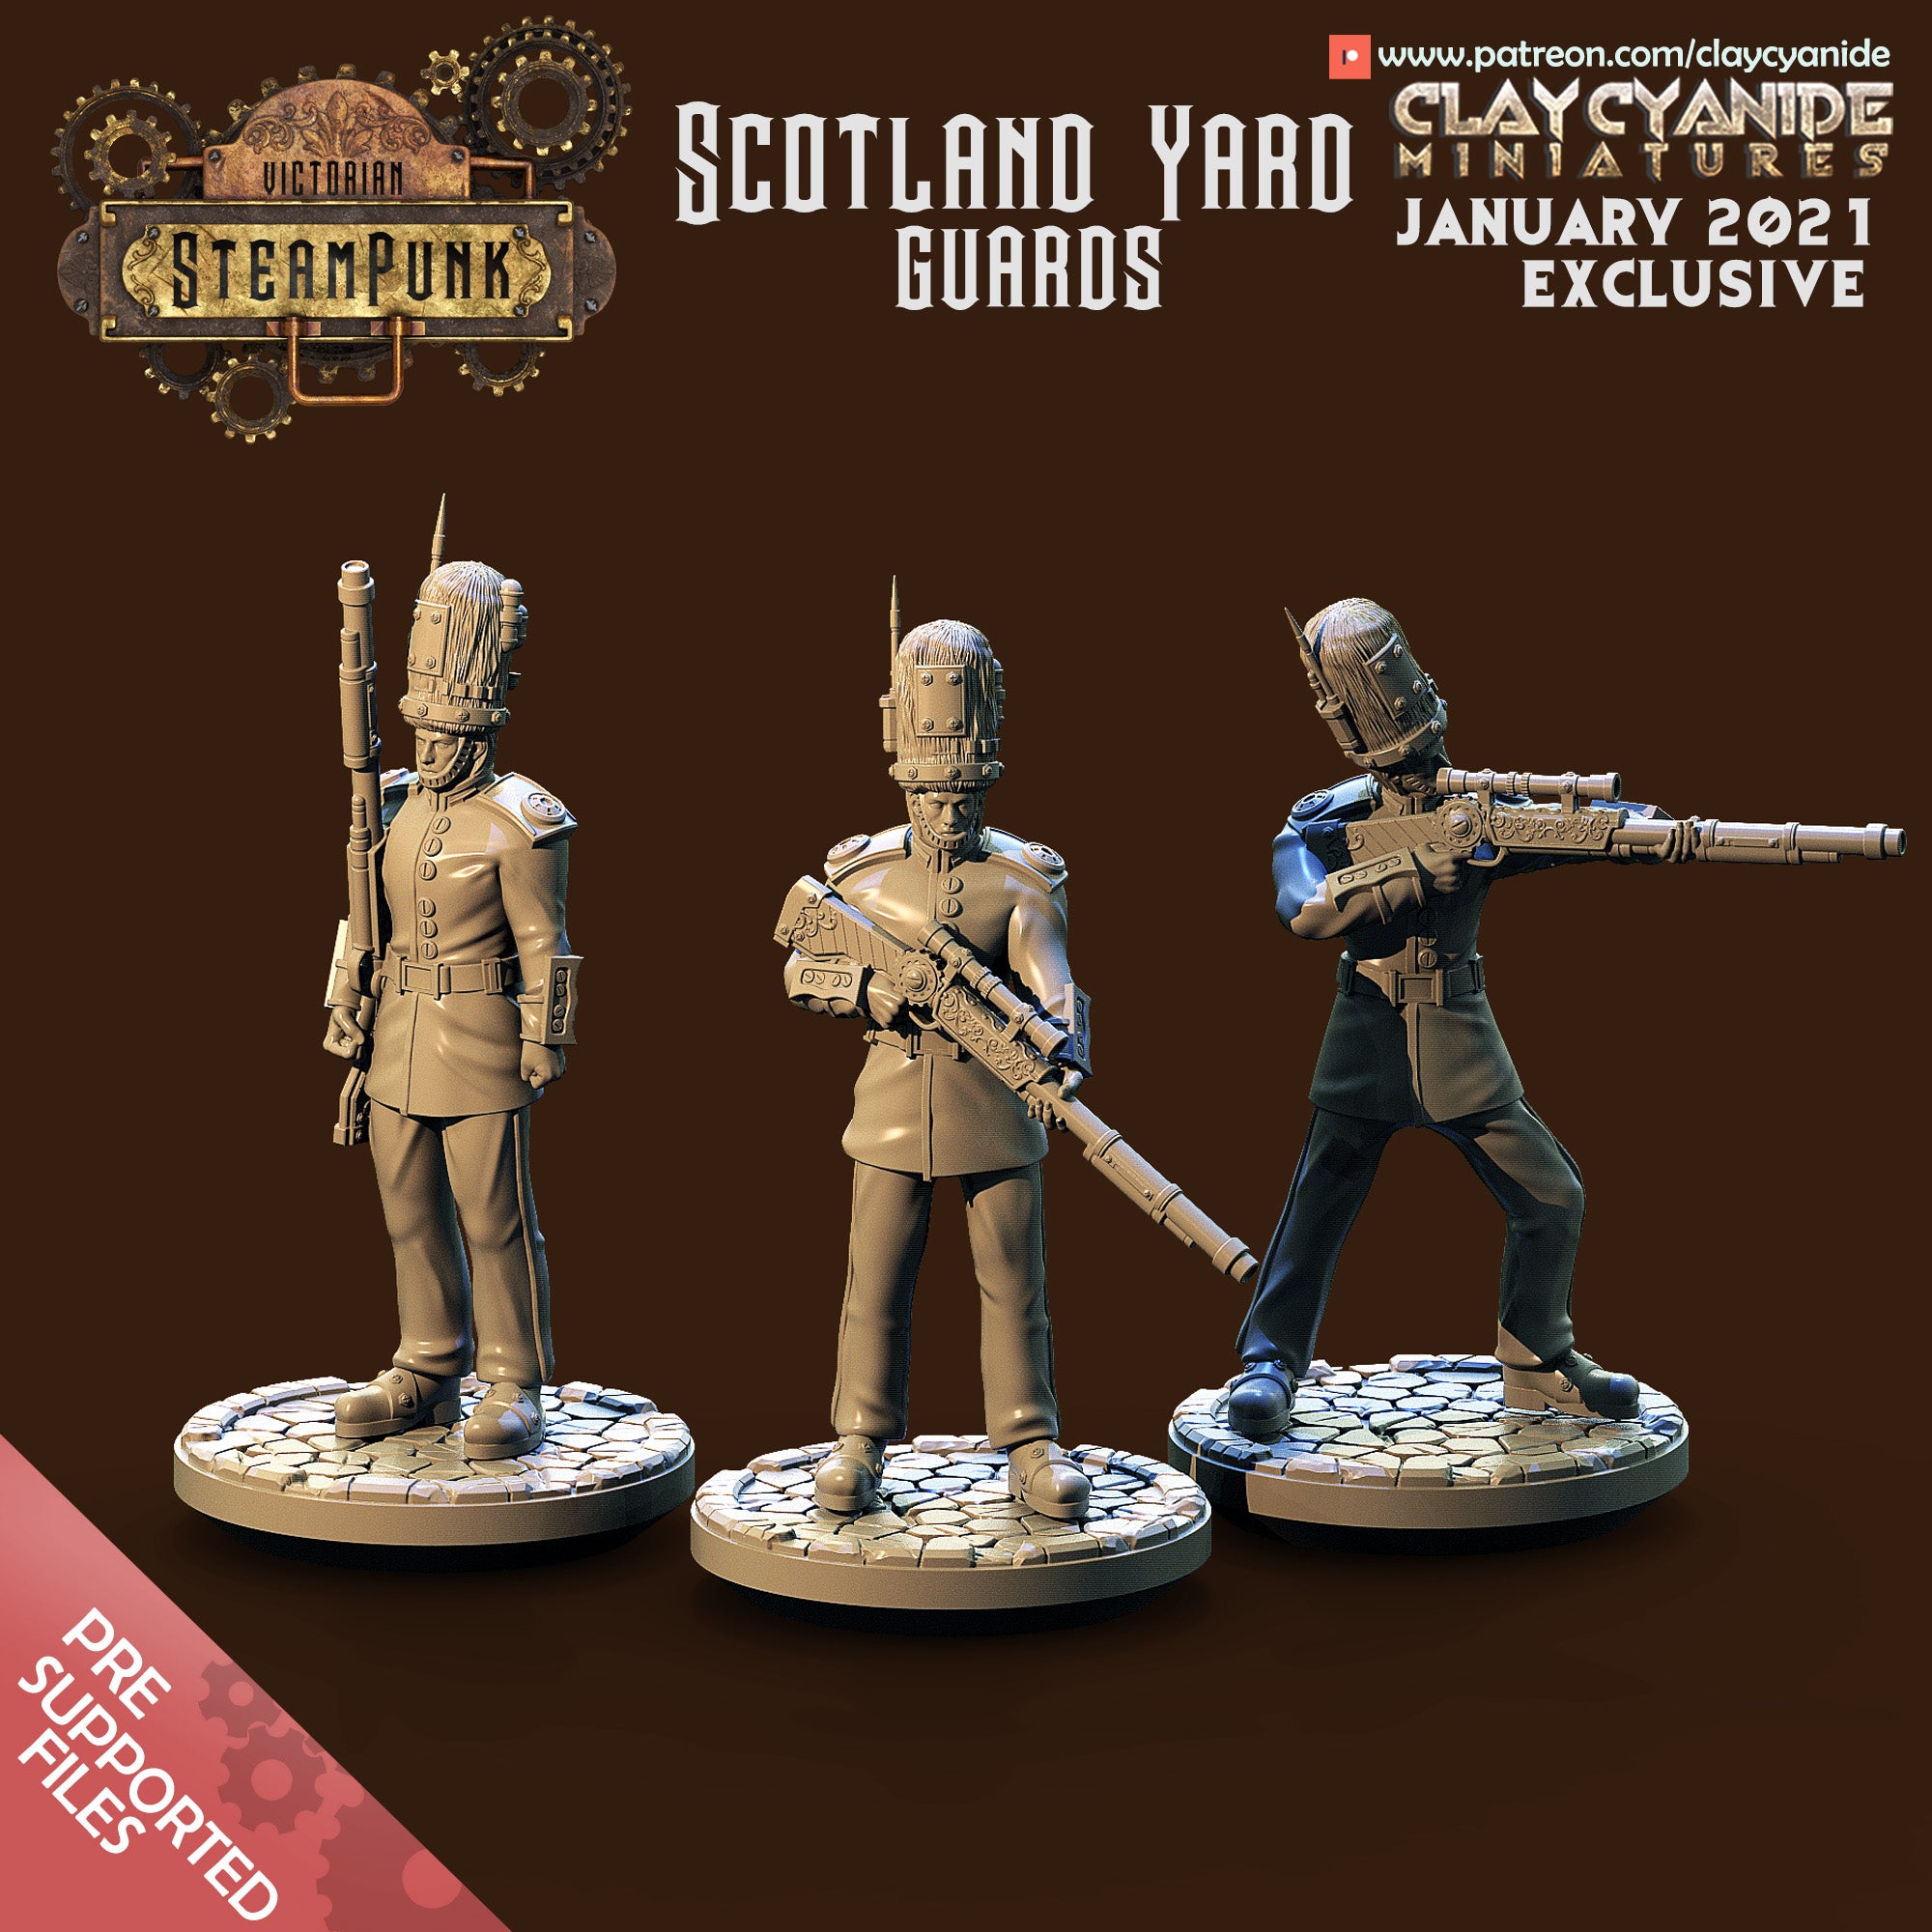 Scotland Yard Guards